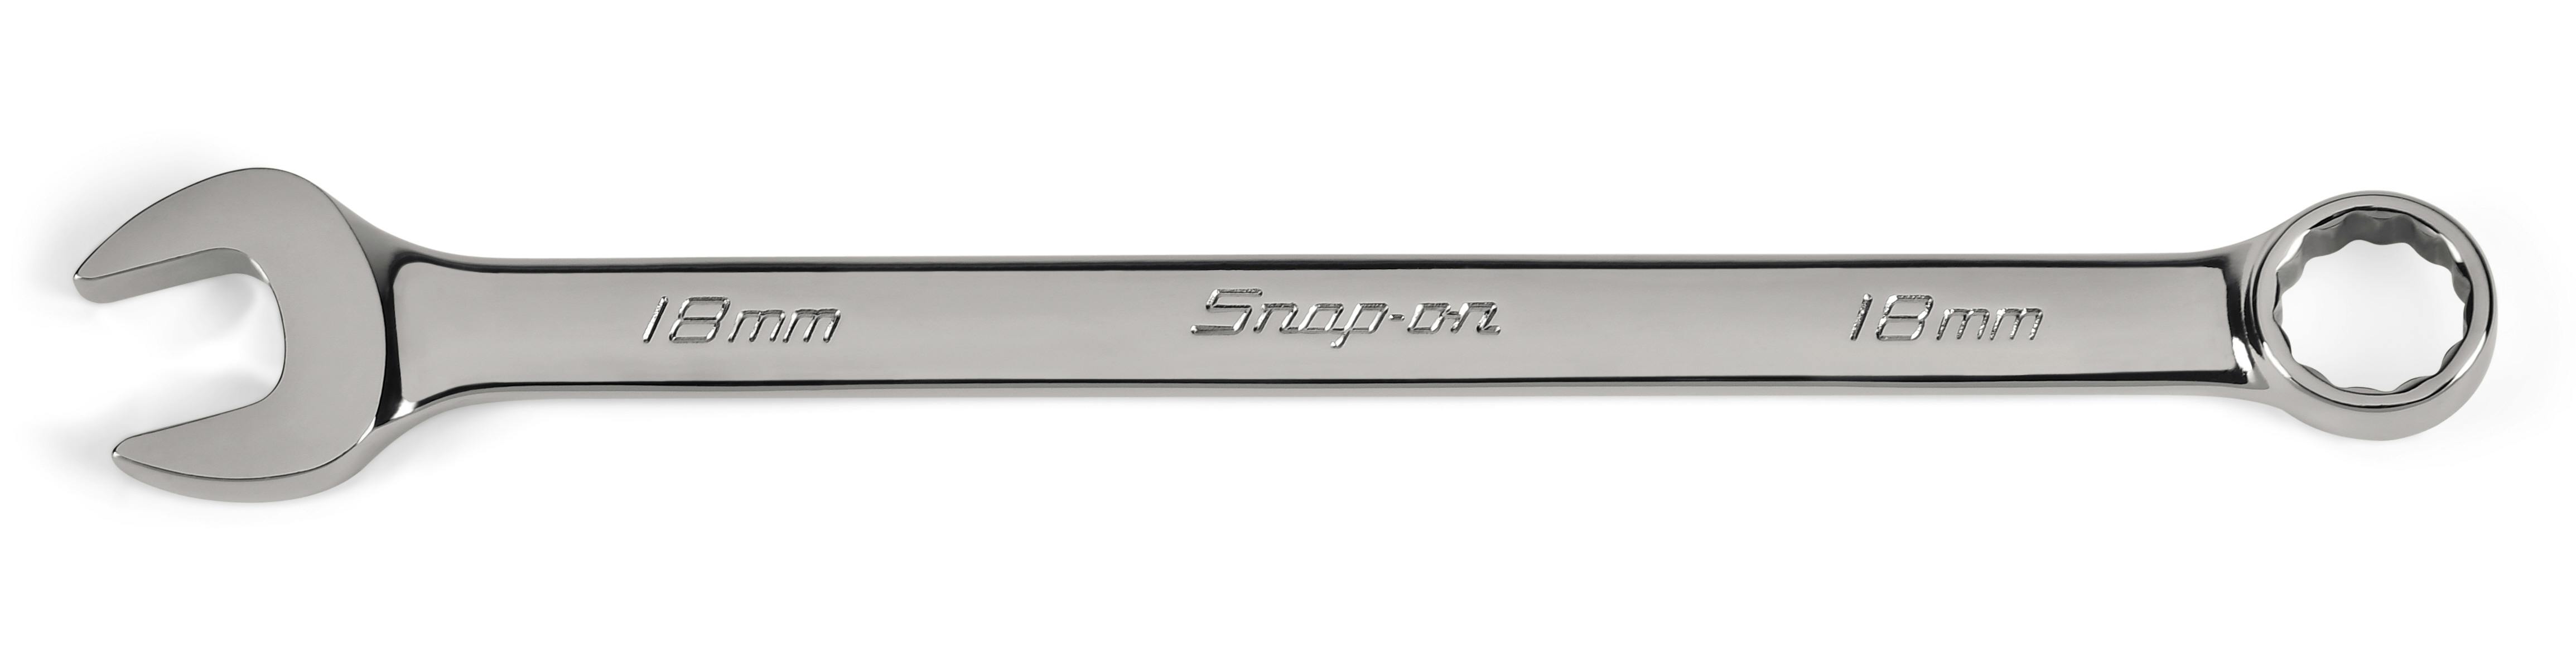 Snap-on OEXM180B 18mm Schlüssel Maulringschlüssel wrench Made in USA 